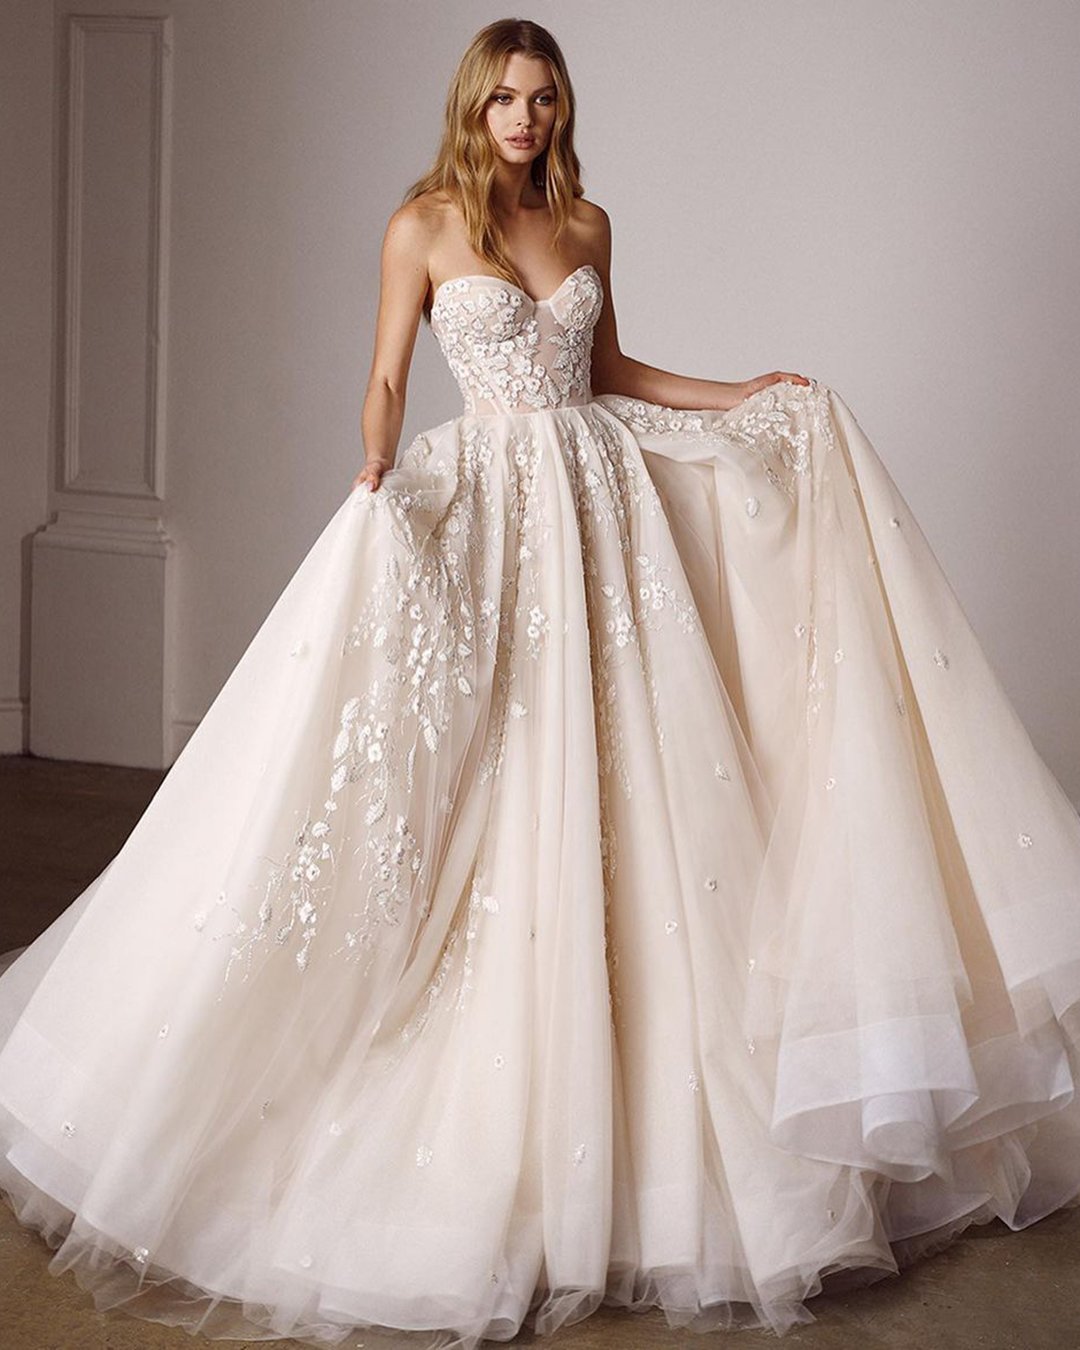 sweetheart neckline wedding dress ball gown strapless lace galialahav